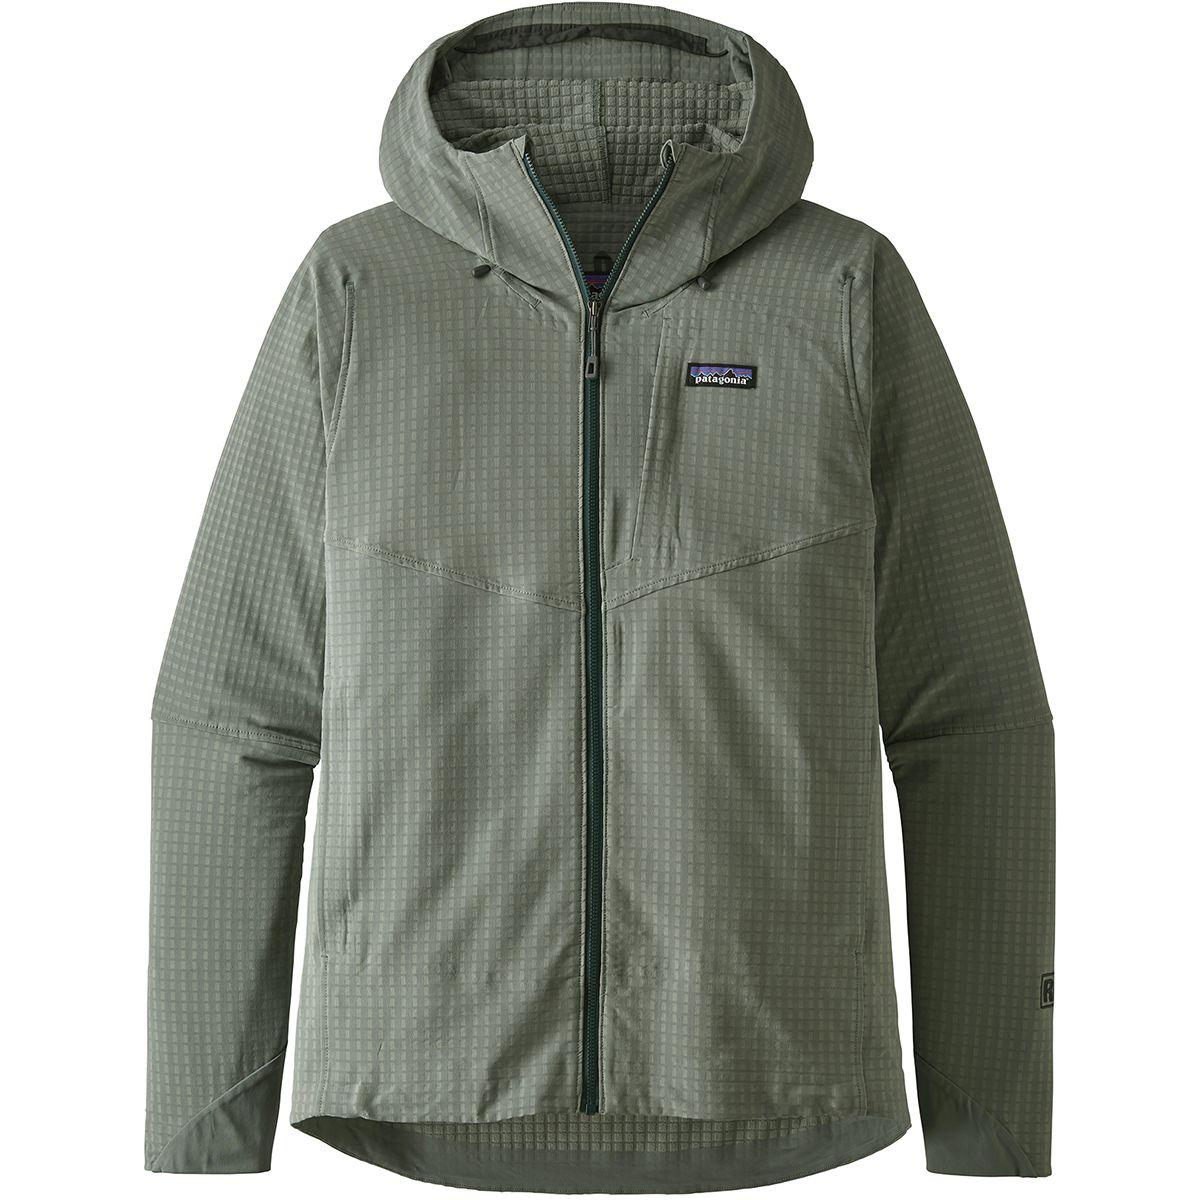 Lyst - Patagonia R1 Techface Hooded Fleece Jacket in Gray for Men